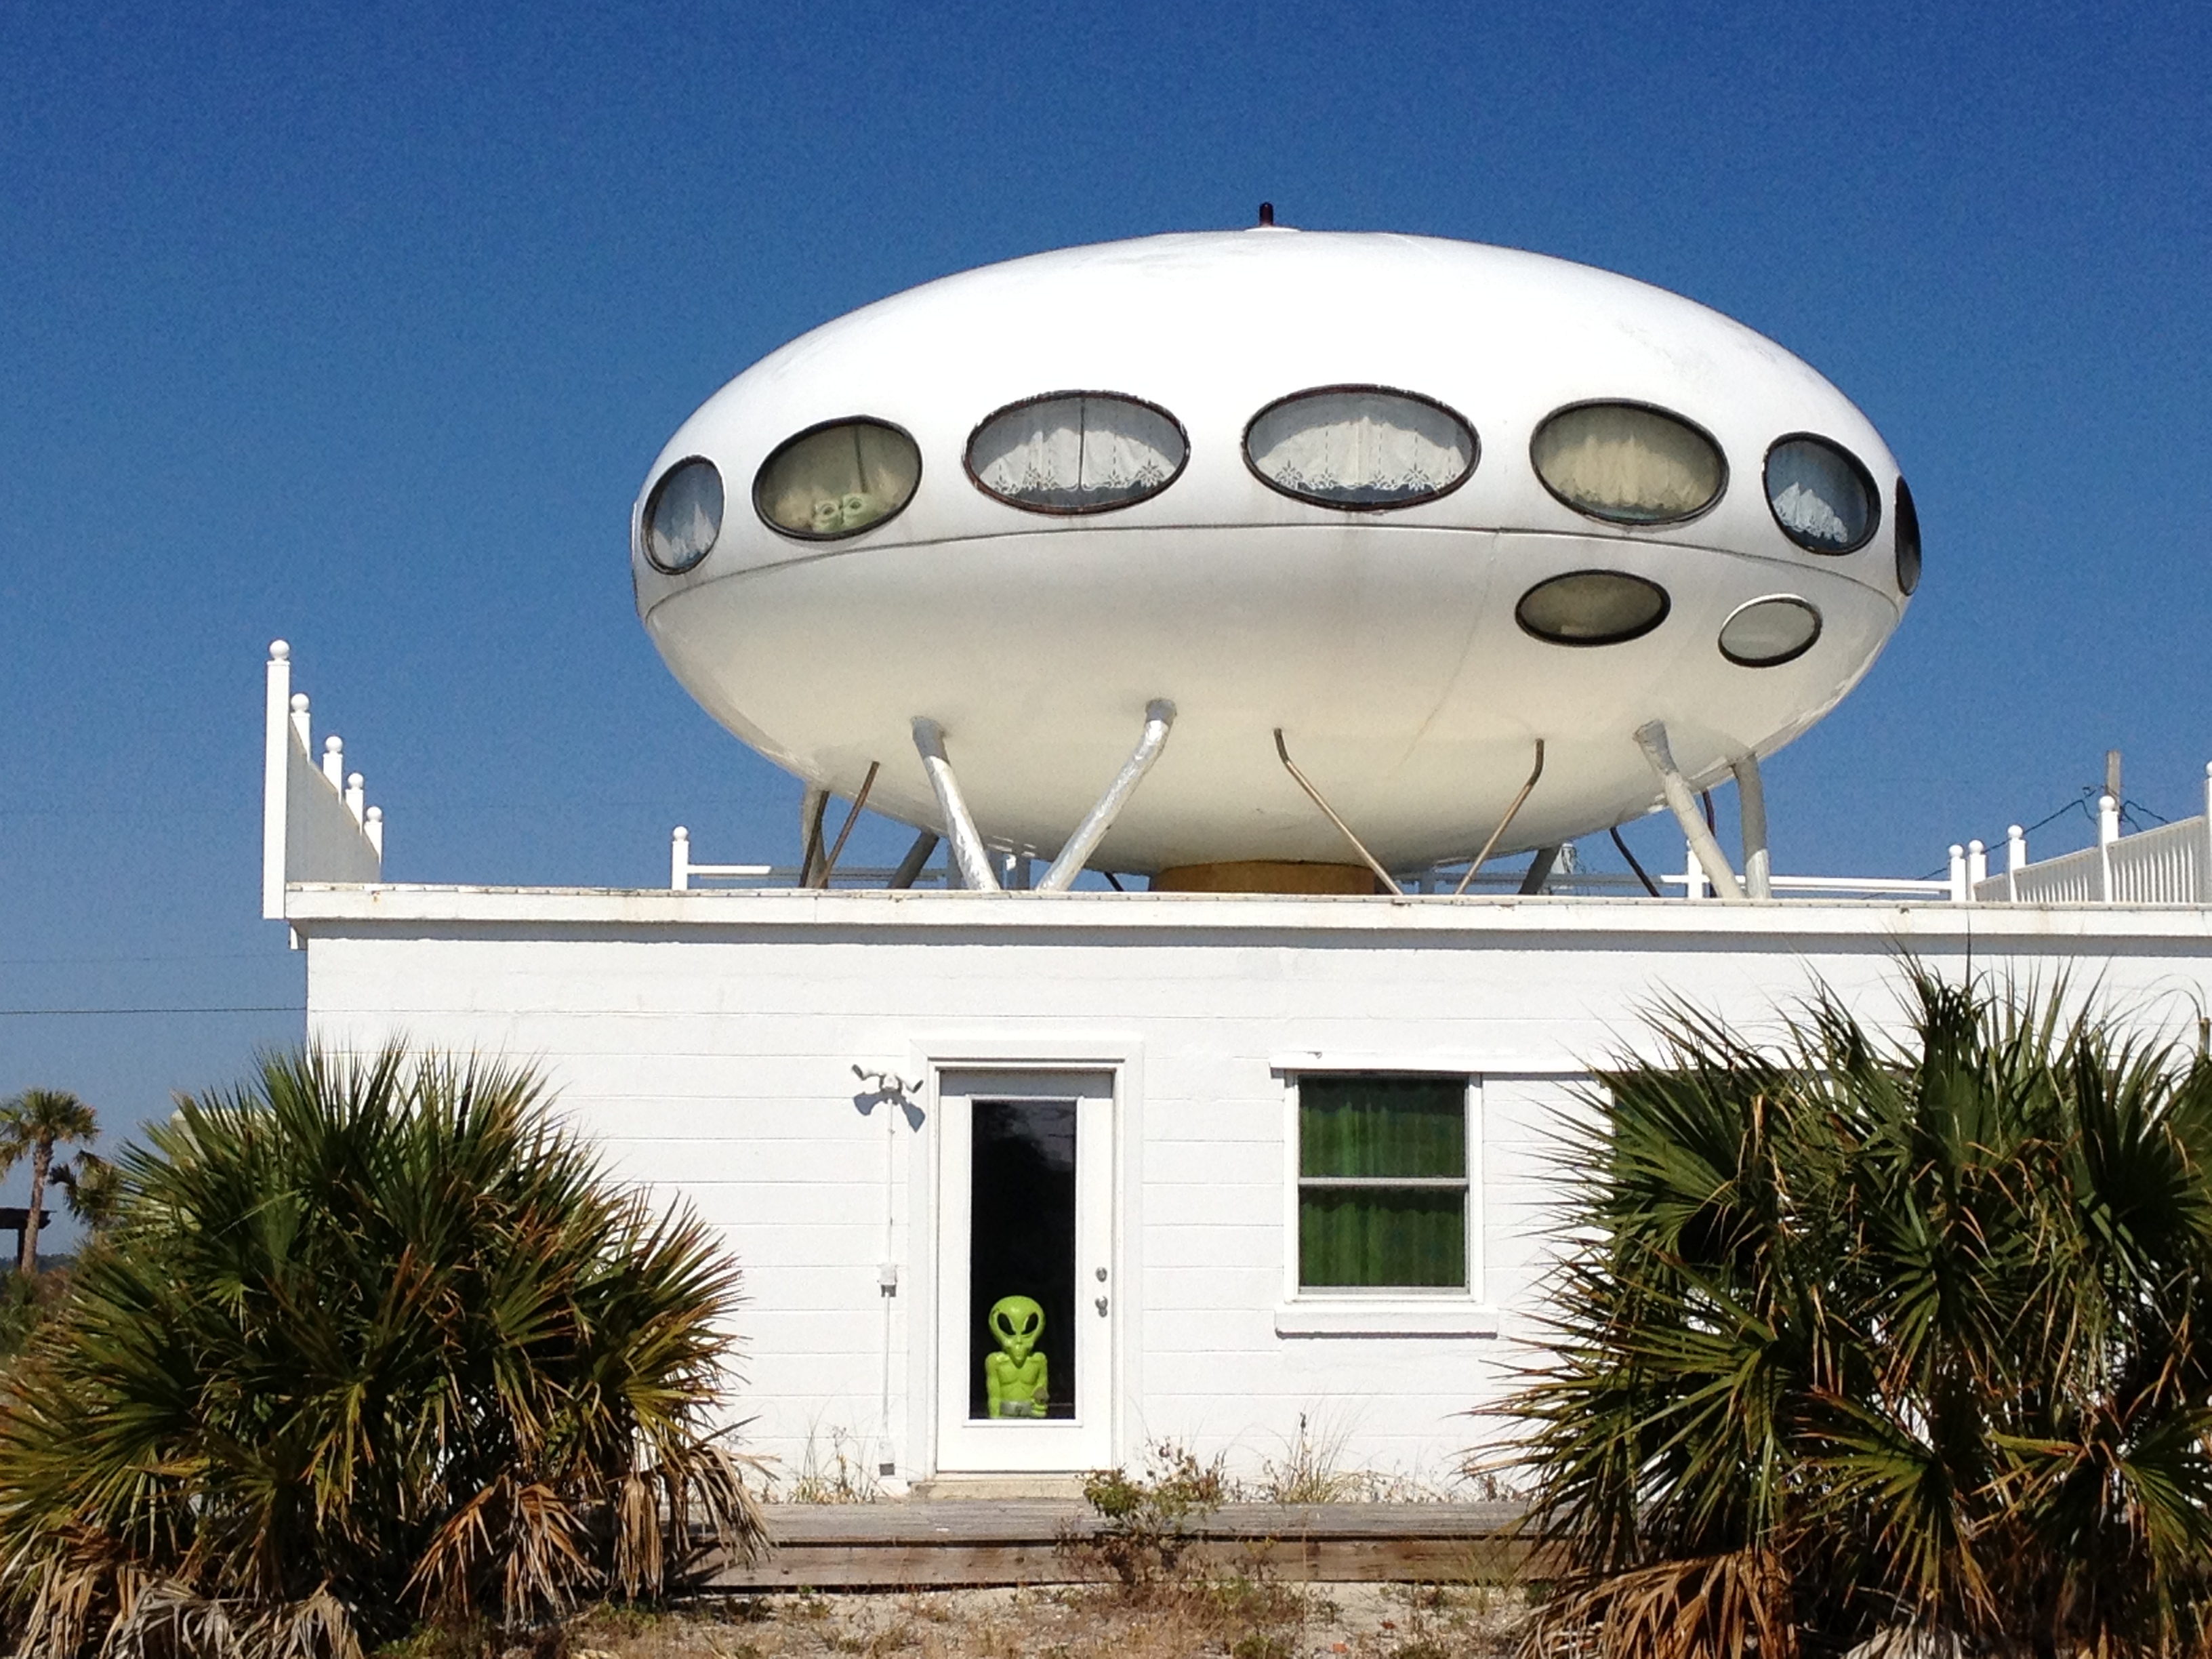 Installed on the Futuro House, Santa Rosa Island, Florida, 2012. © TimothyJ / Flickr